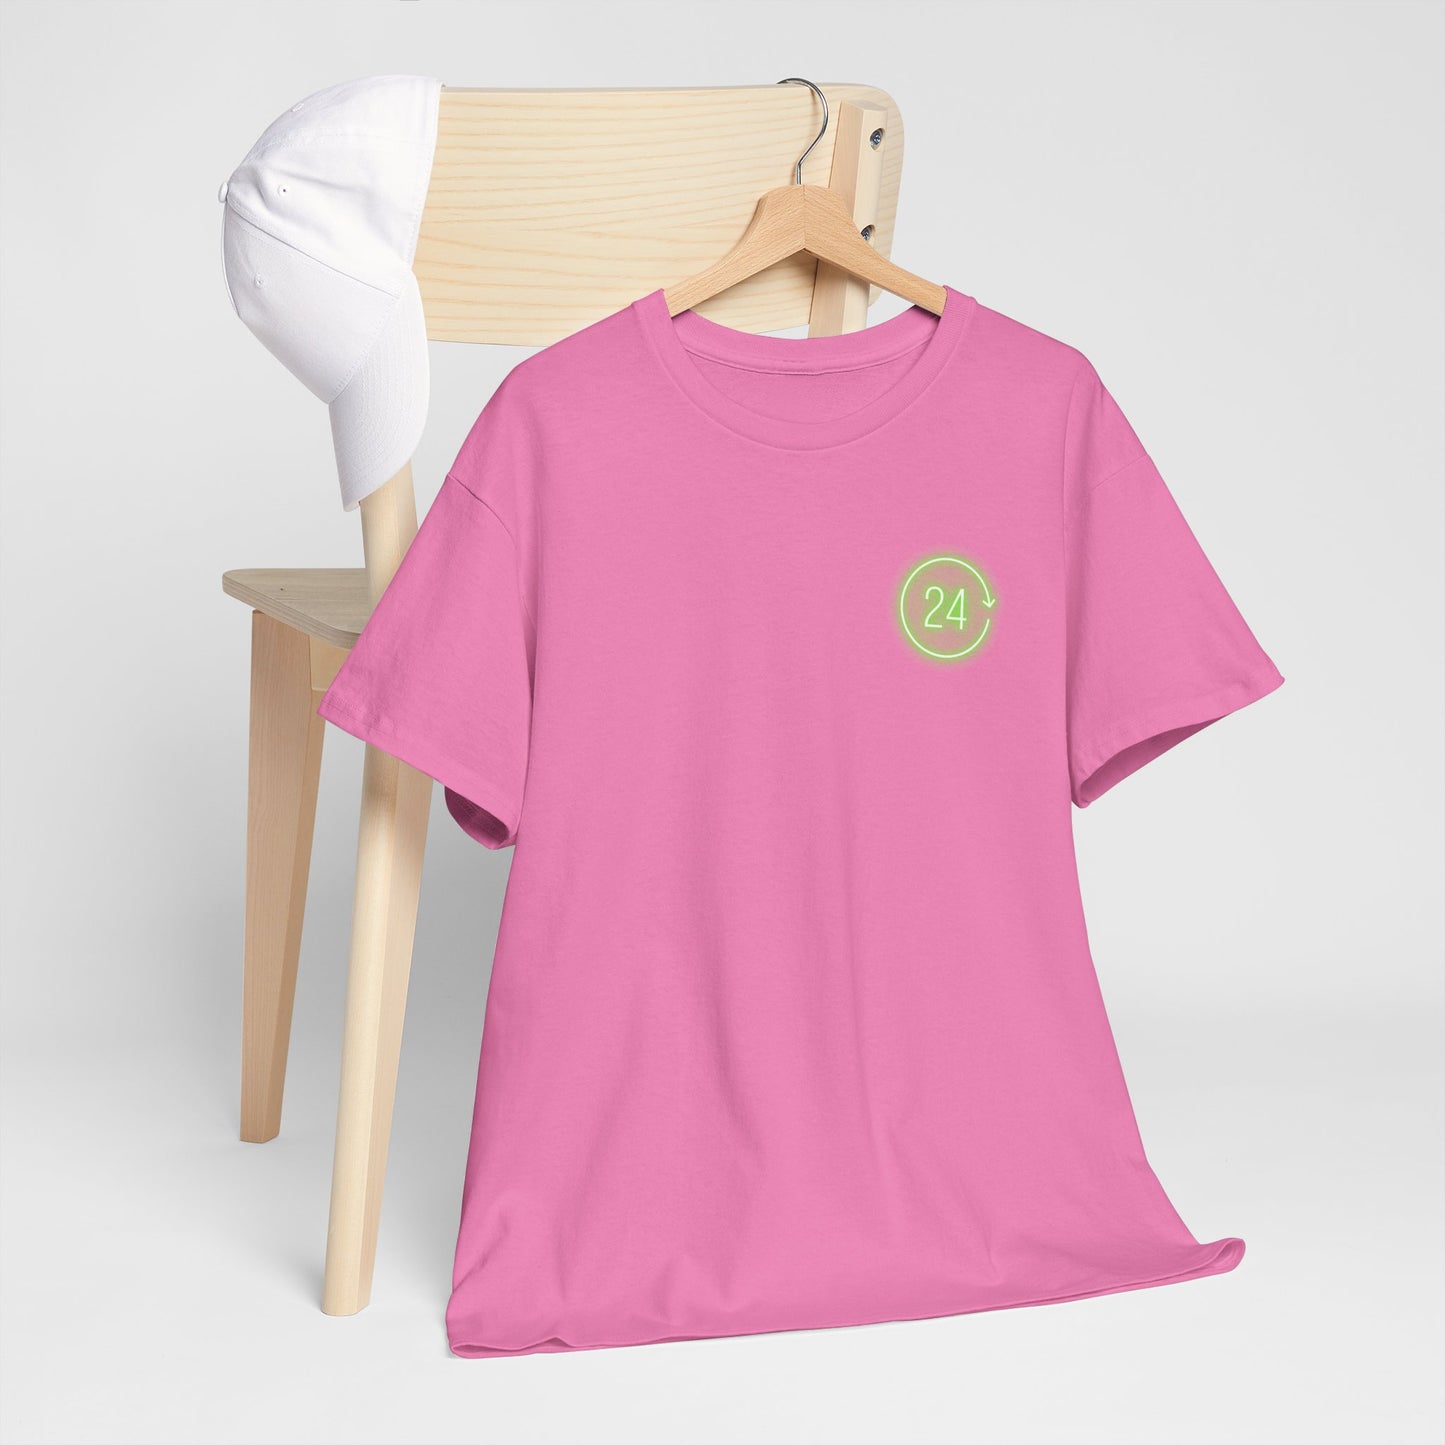 Unisex Heavy Cotton Graphic design (24) T-shirt